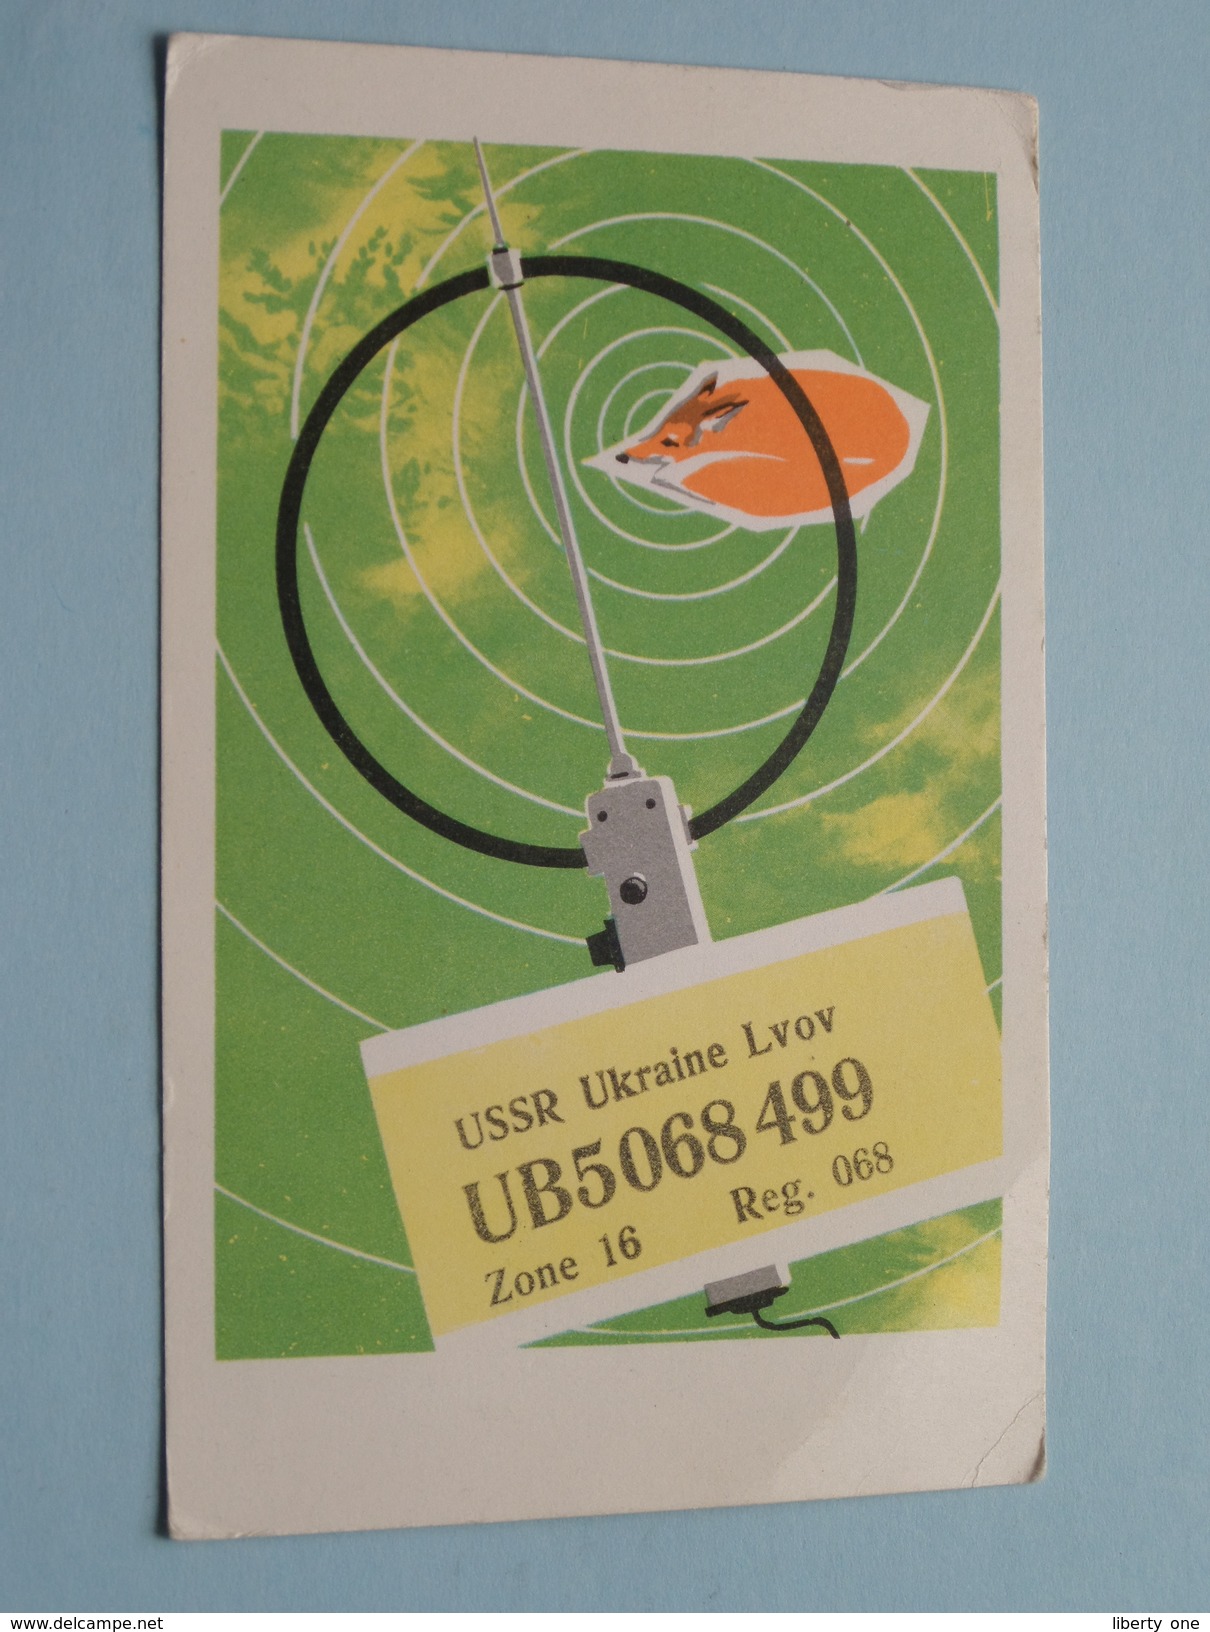 USSR Ukraine Lvov UB5068499 Zone 16 - Reg. 068 > FM7AV - 1981 ( Zie Foto Voor Details ) - Radio Amateur